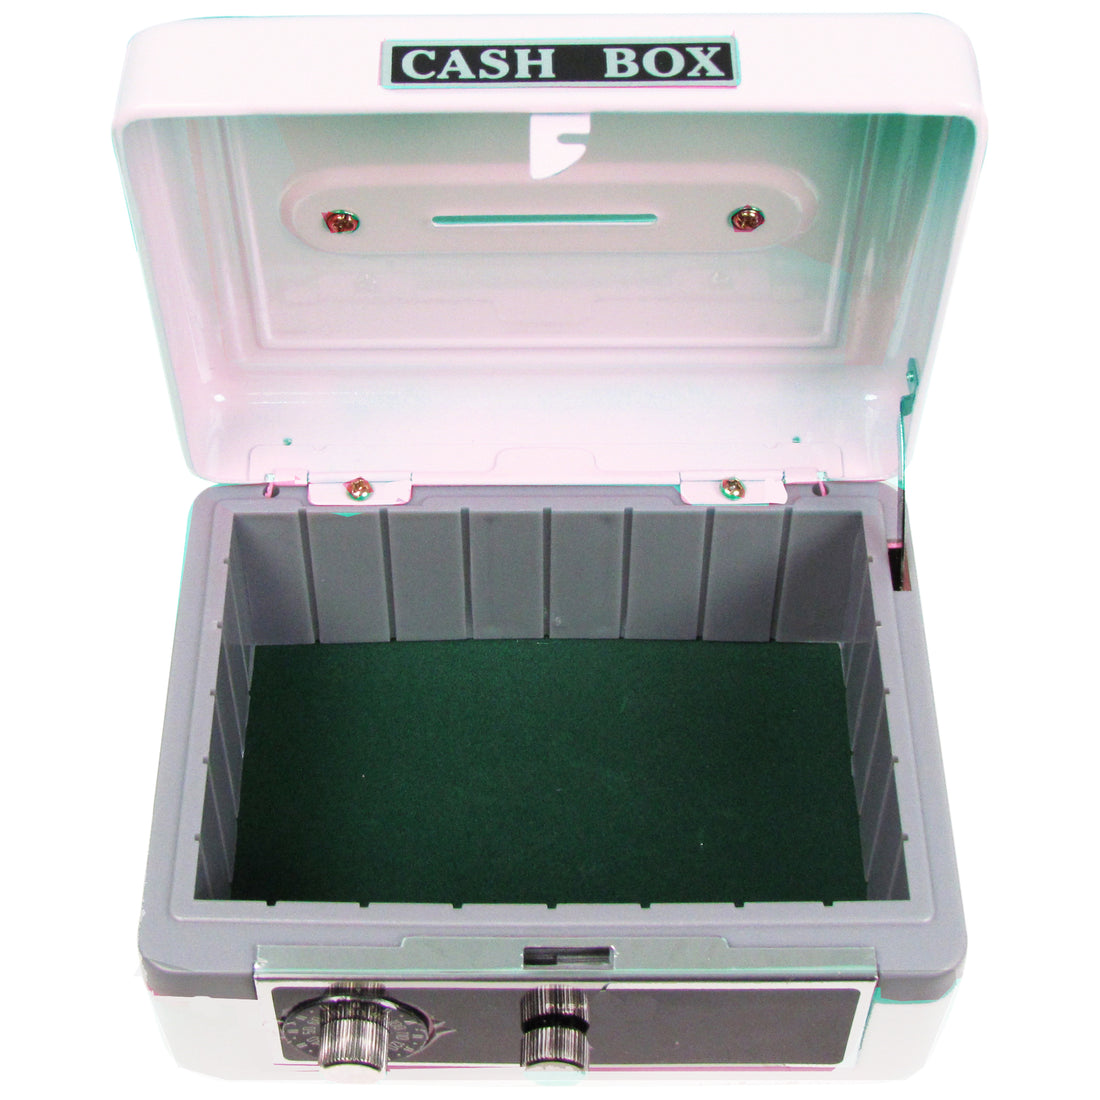 Personalized White Cash Box with Sports design